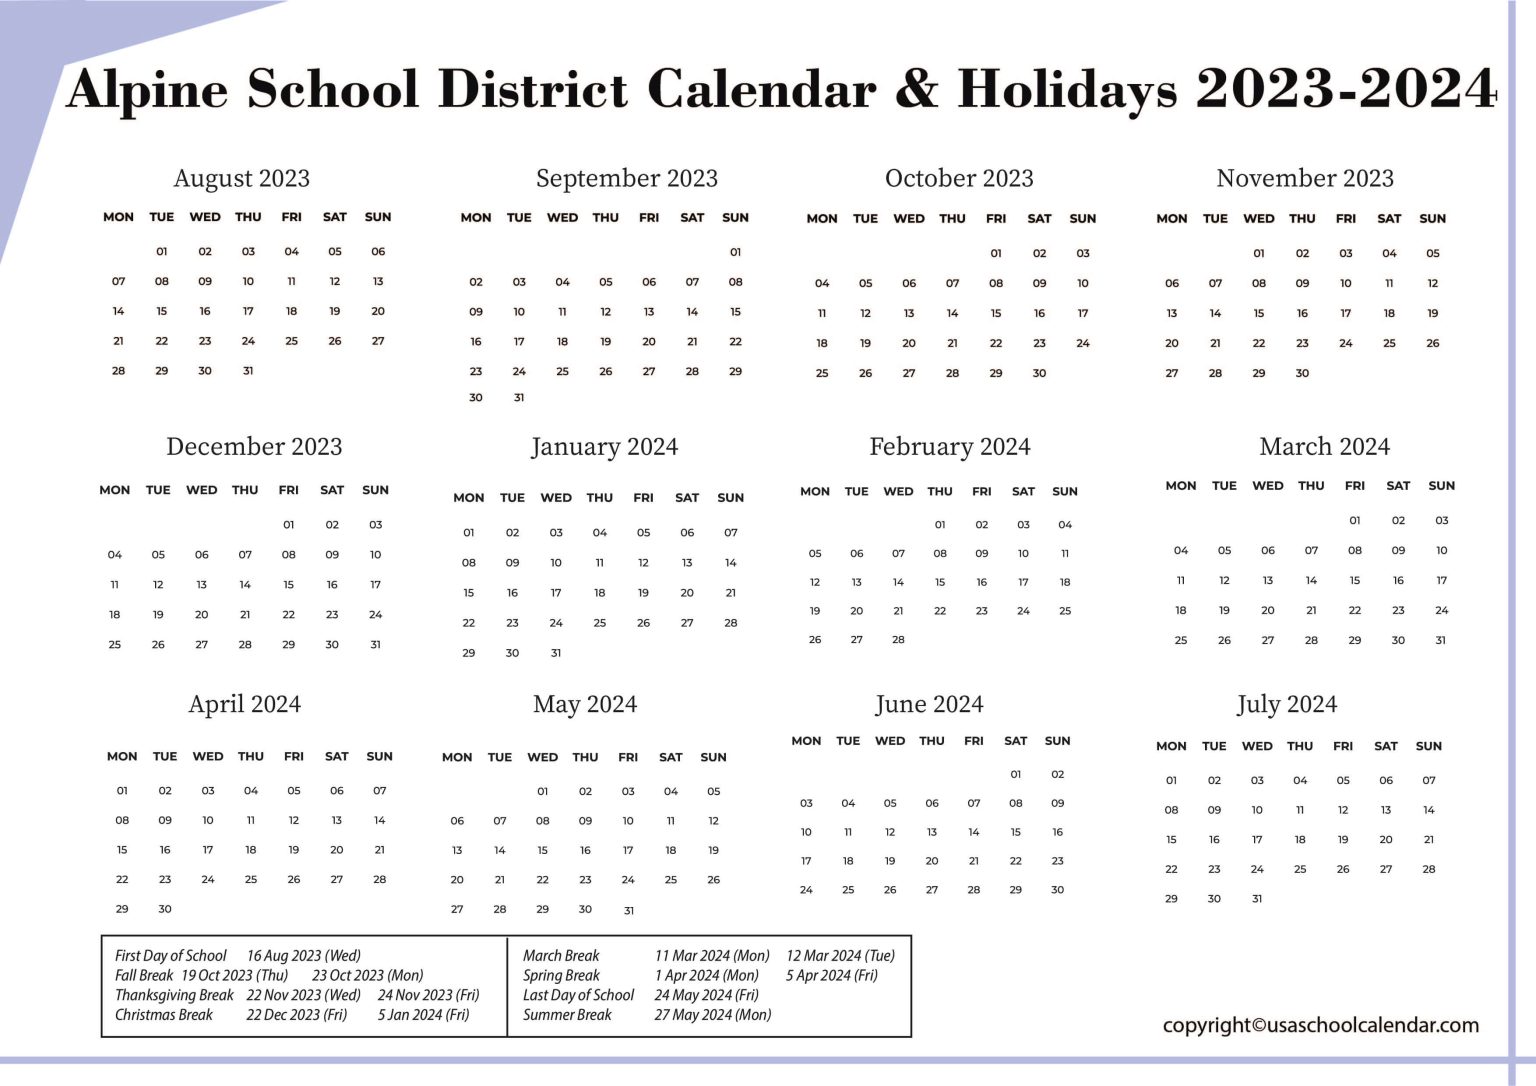 Alpine School District Calendar Holidays 2023 2024